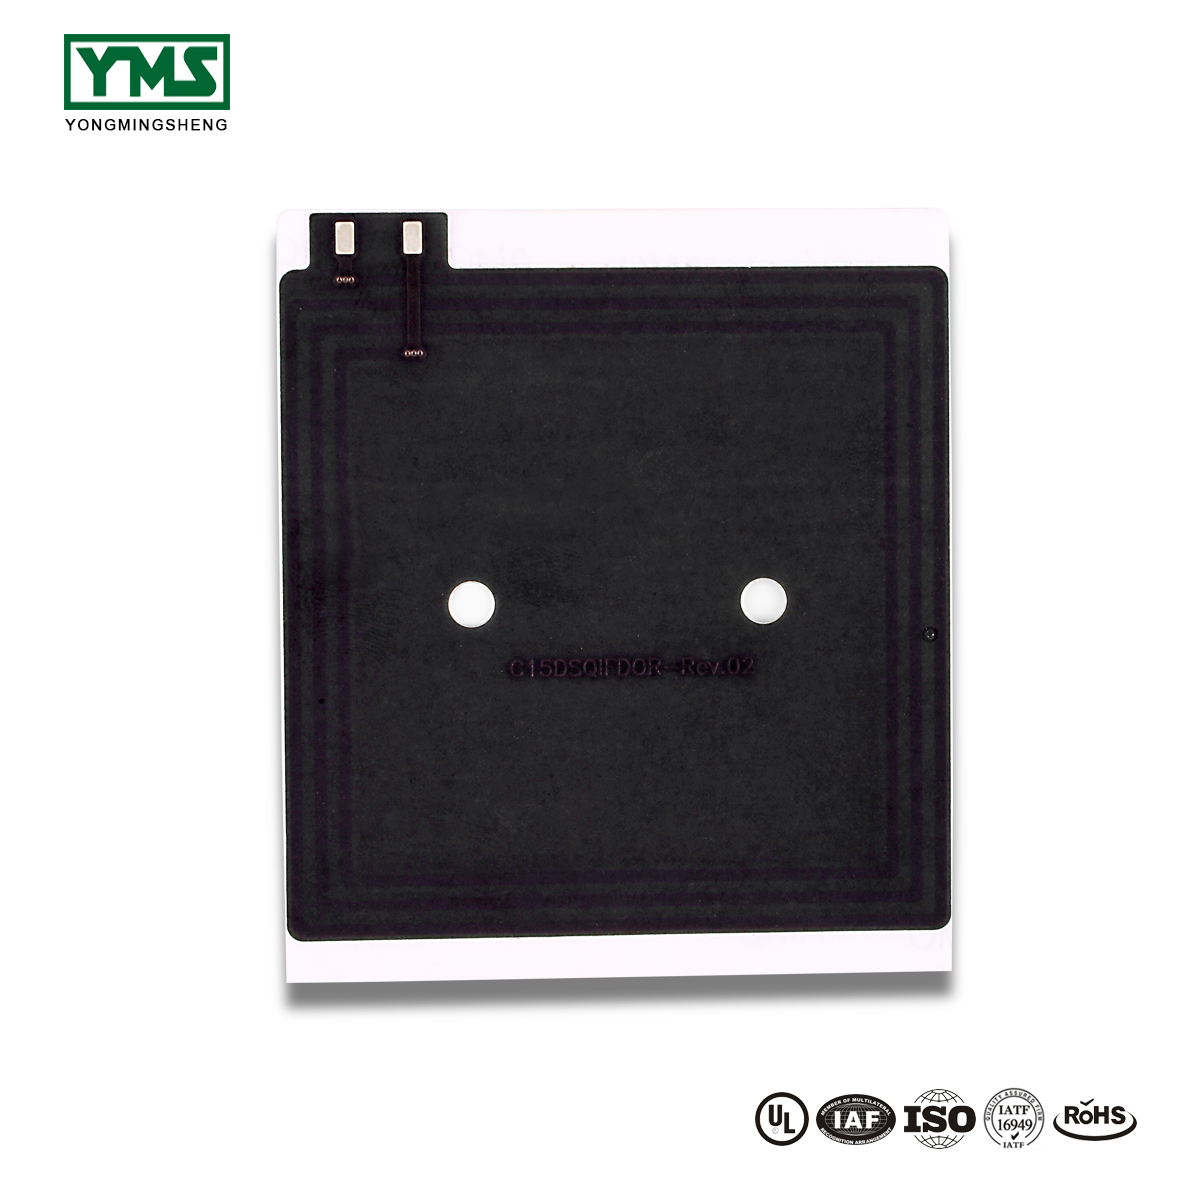 Best-Selling Quick Turn Printed Circuit Board - 1Layer Black solder mask Flexible Board | YMSPCB – Yongmingsheng